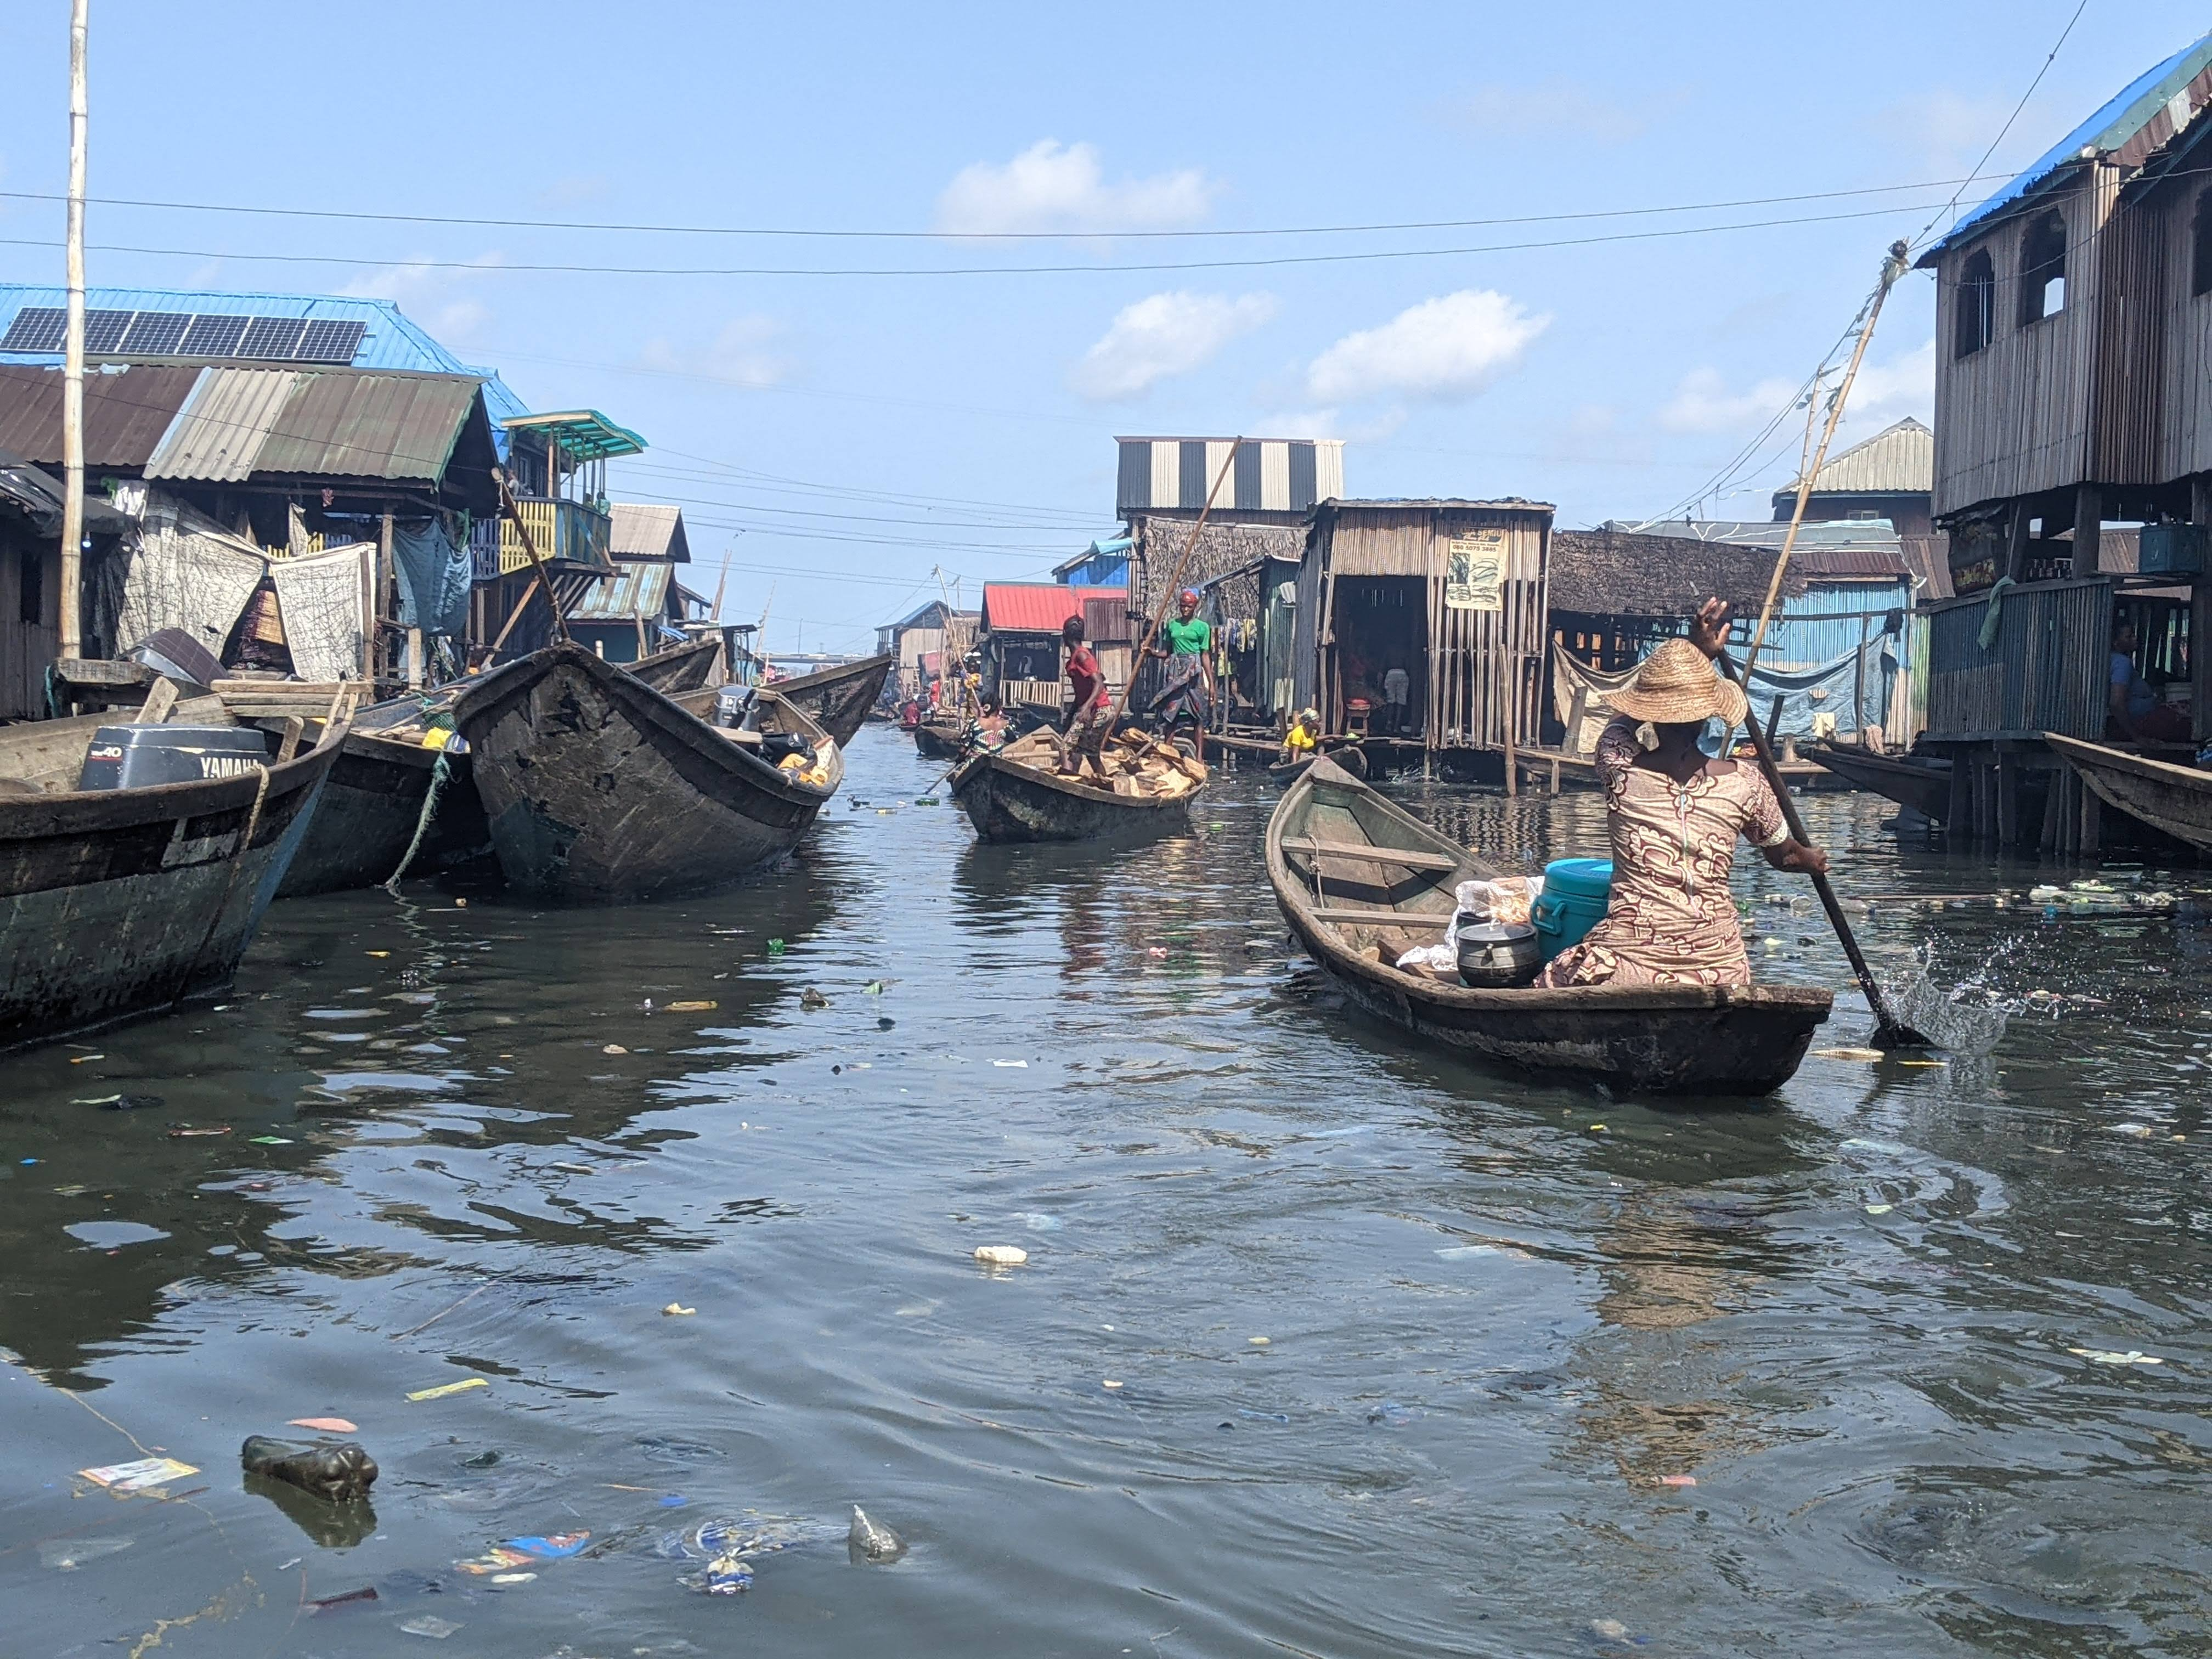 Makoko